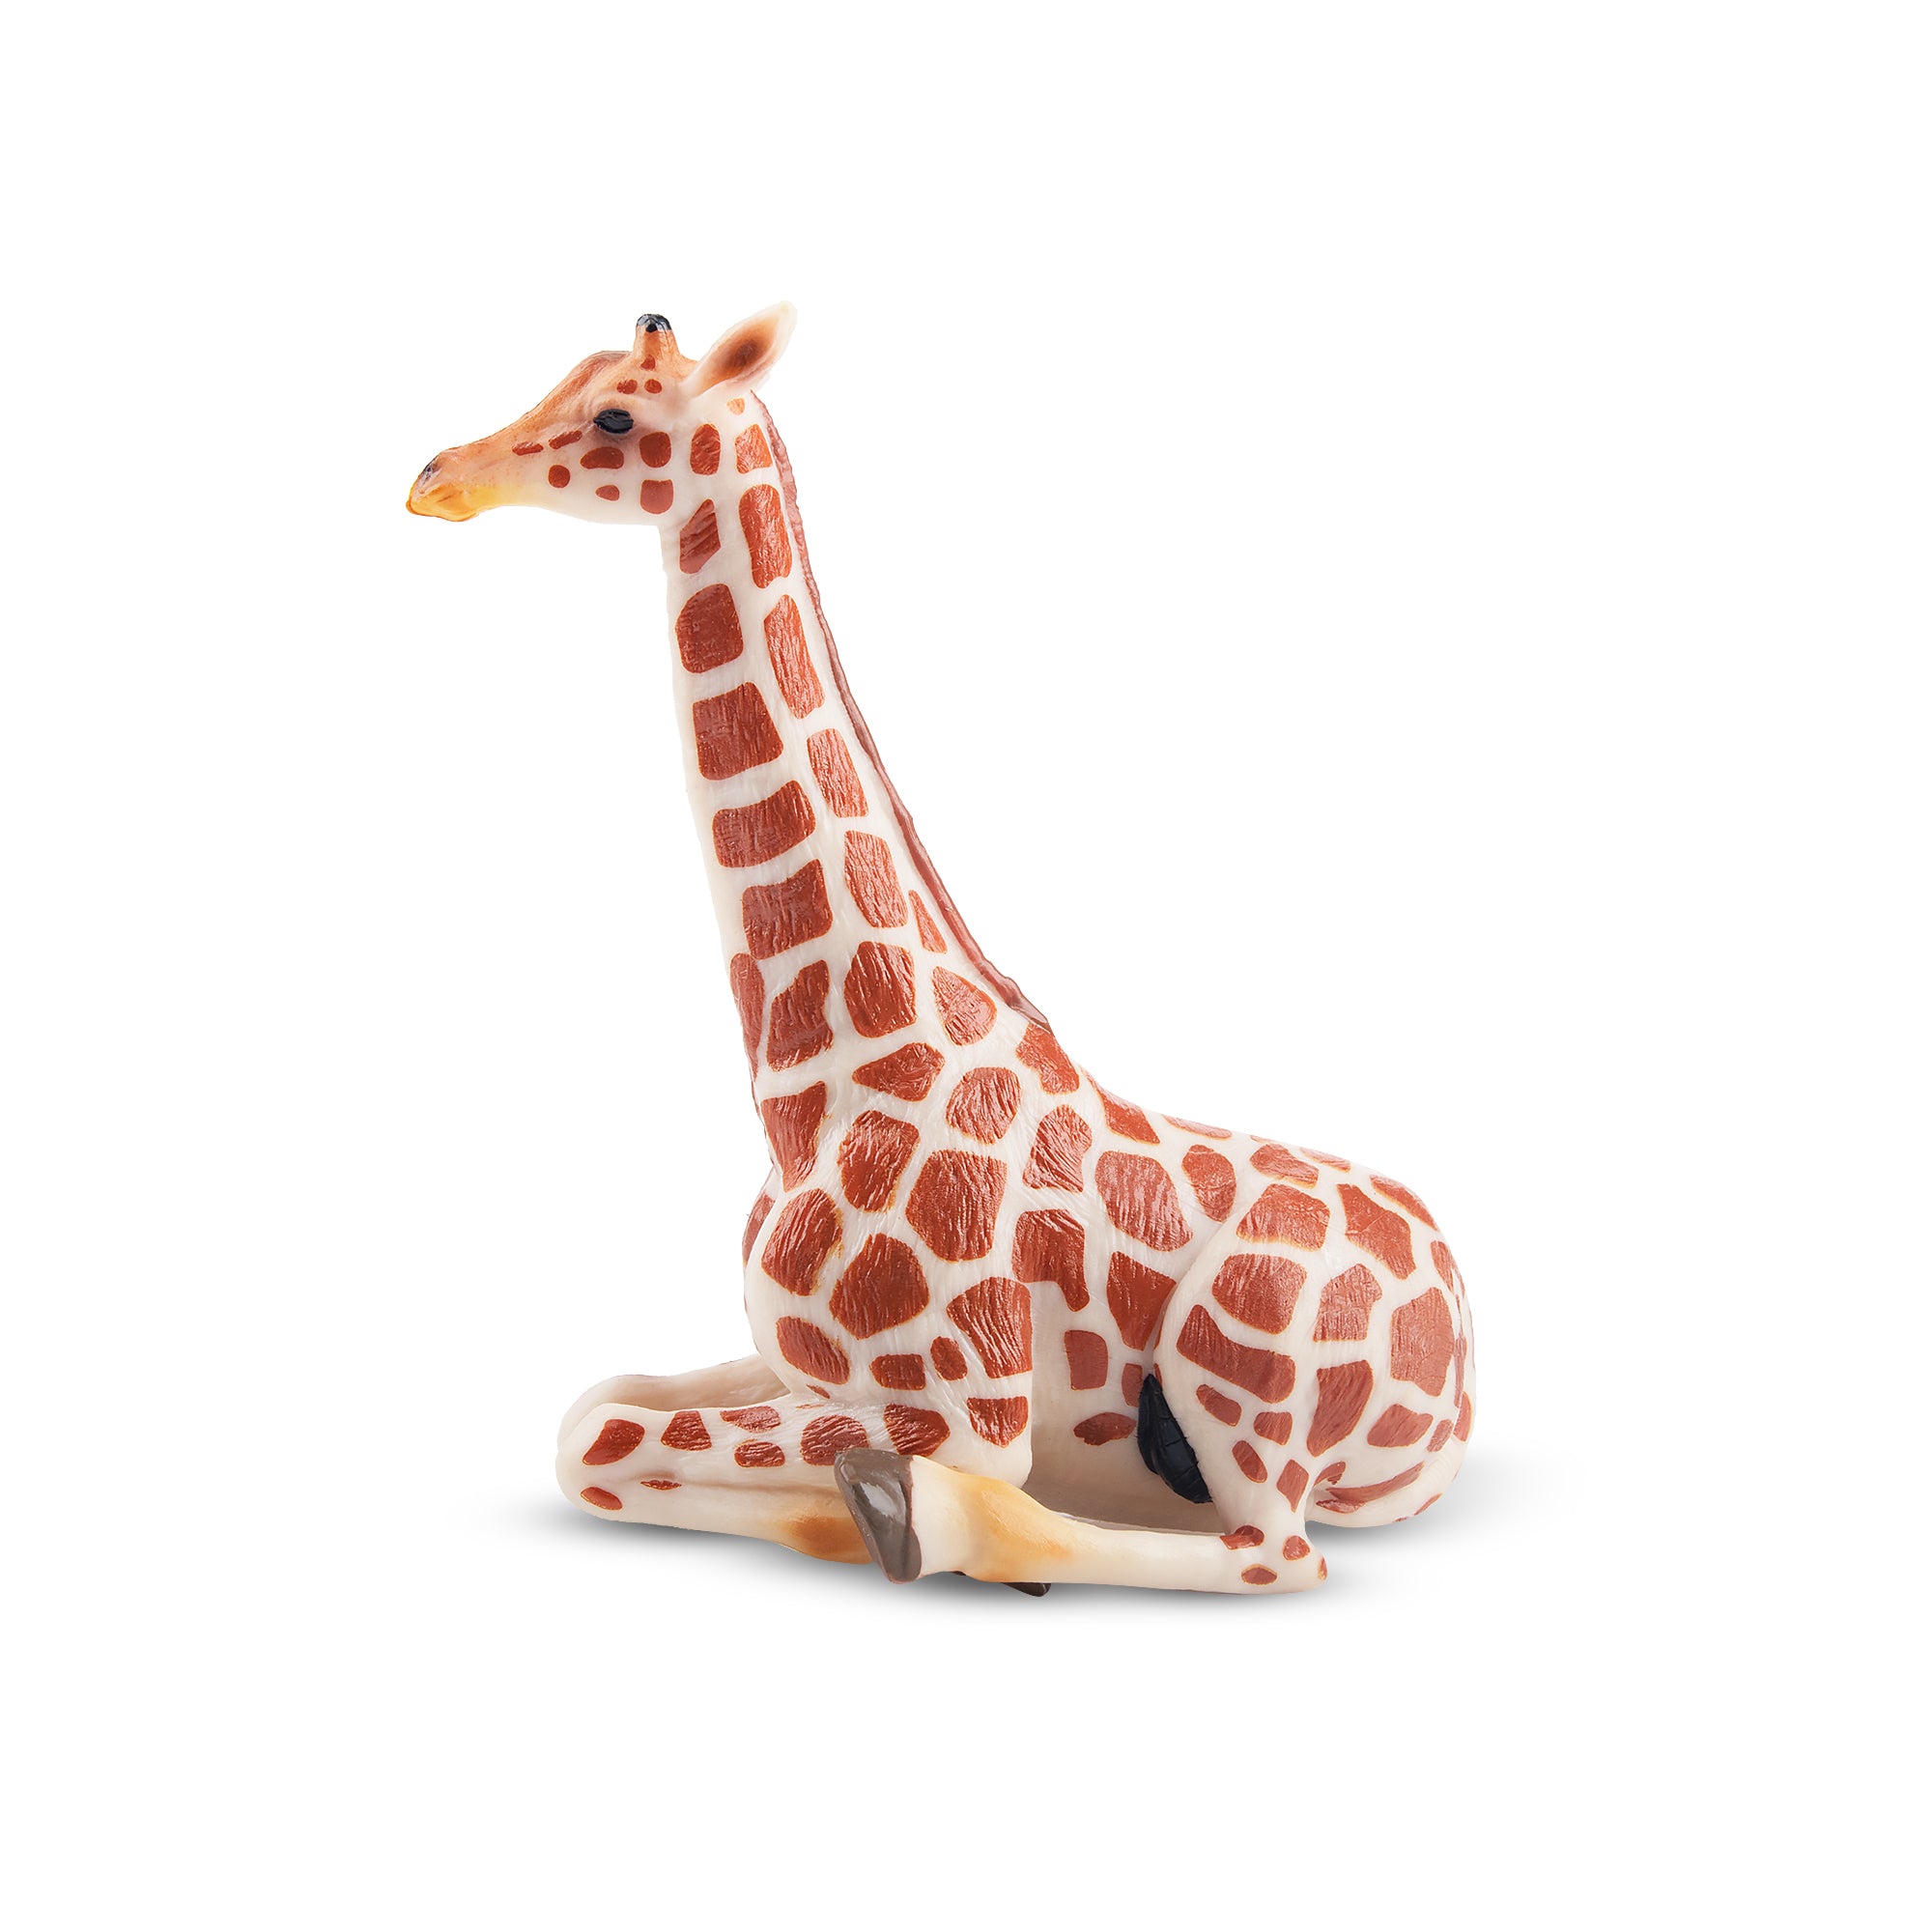 Toymany Sitting Giraffe Figurine Toy